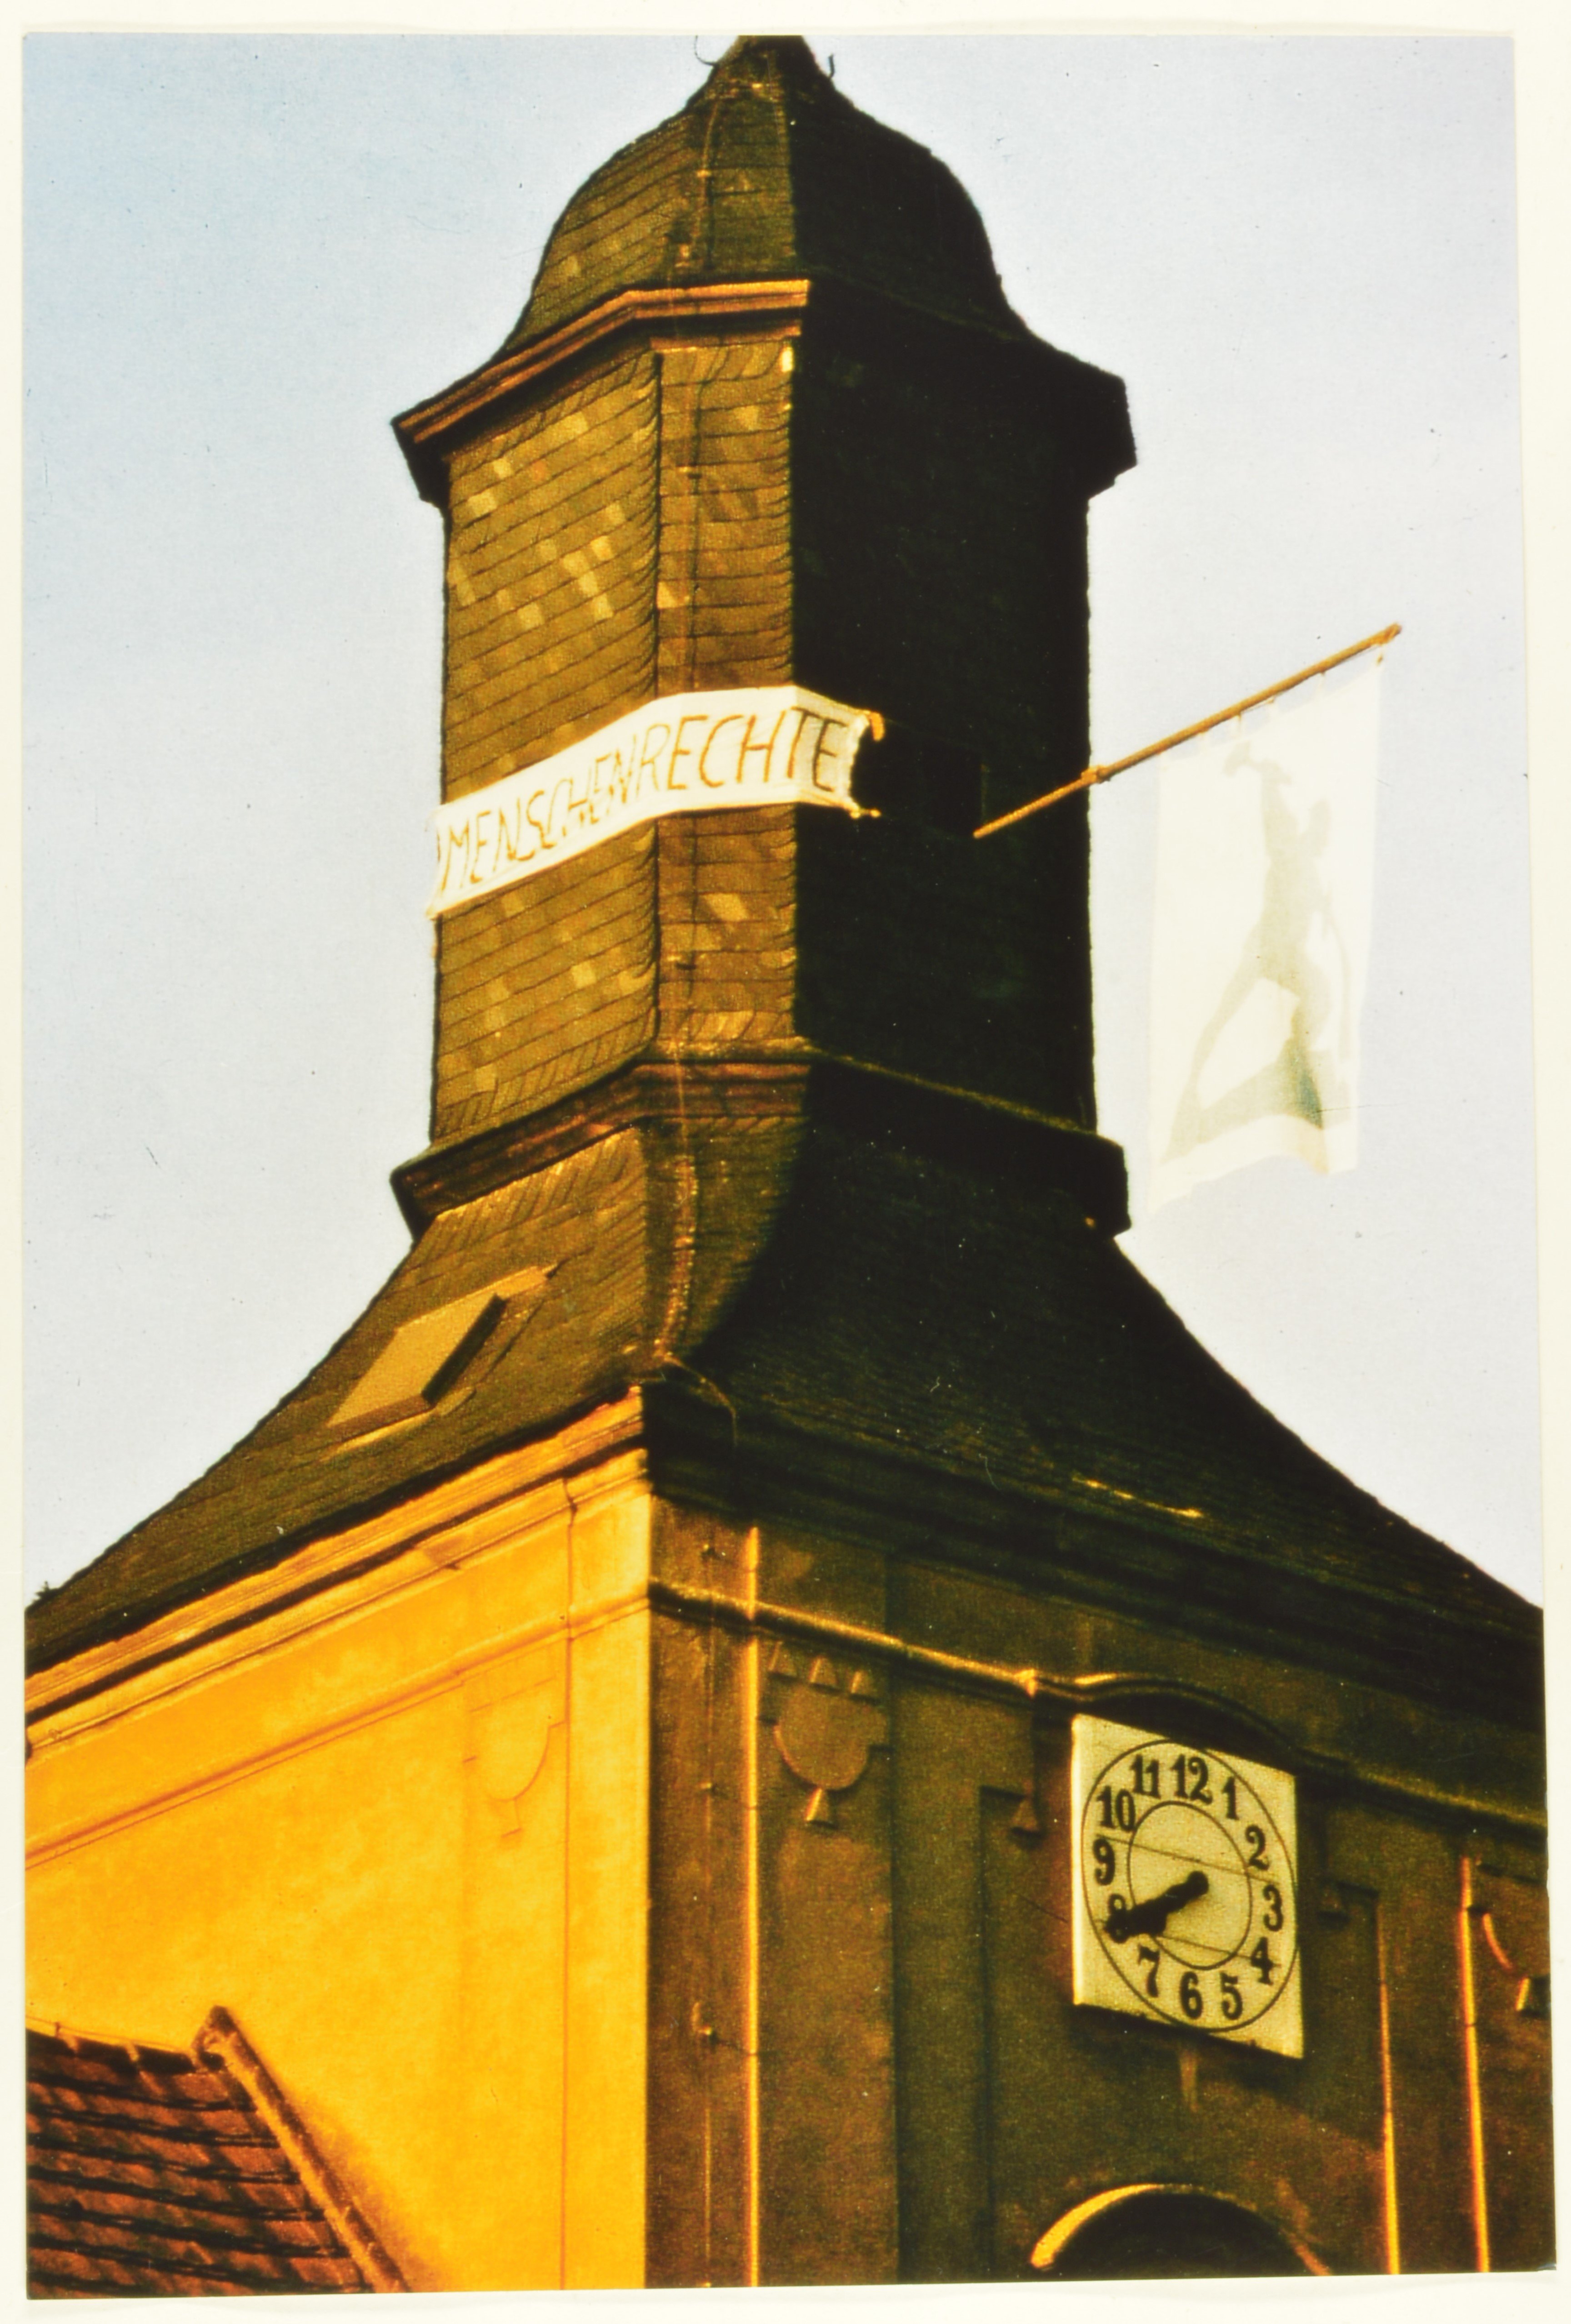 Transparent am Turm der Köritzer Kirche: "Menschenrechte" (DDR Geschichtsmuseum im Dokumentationszentrum Perleberg CC BY-SA)